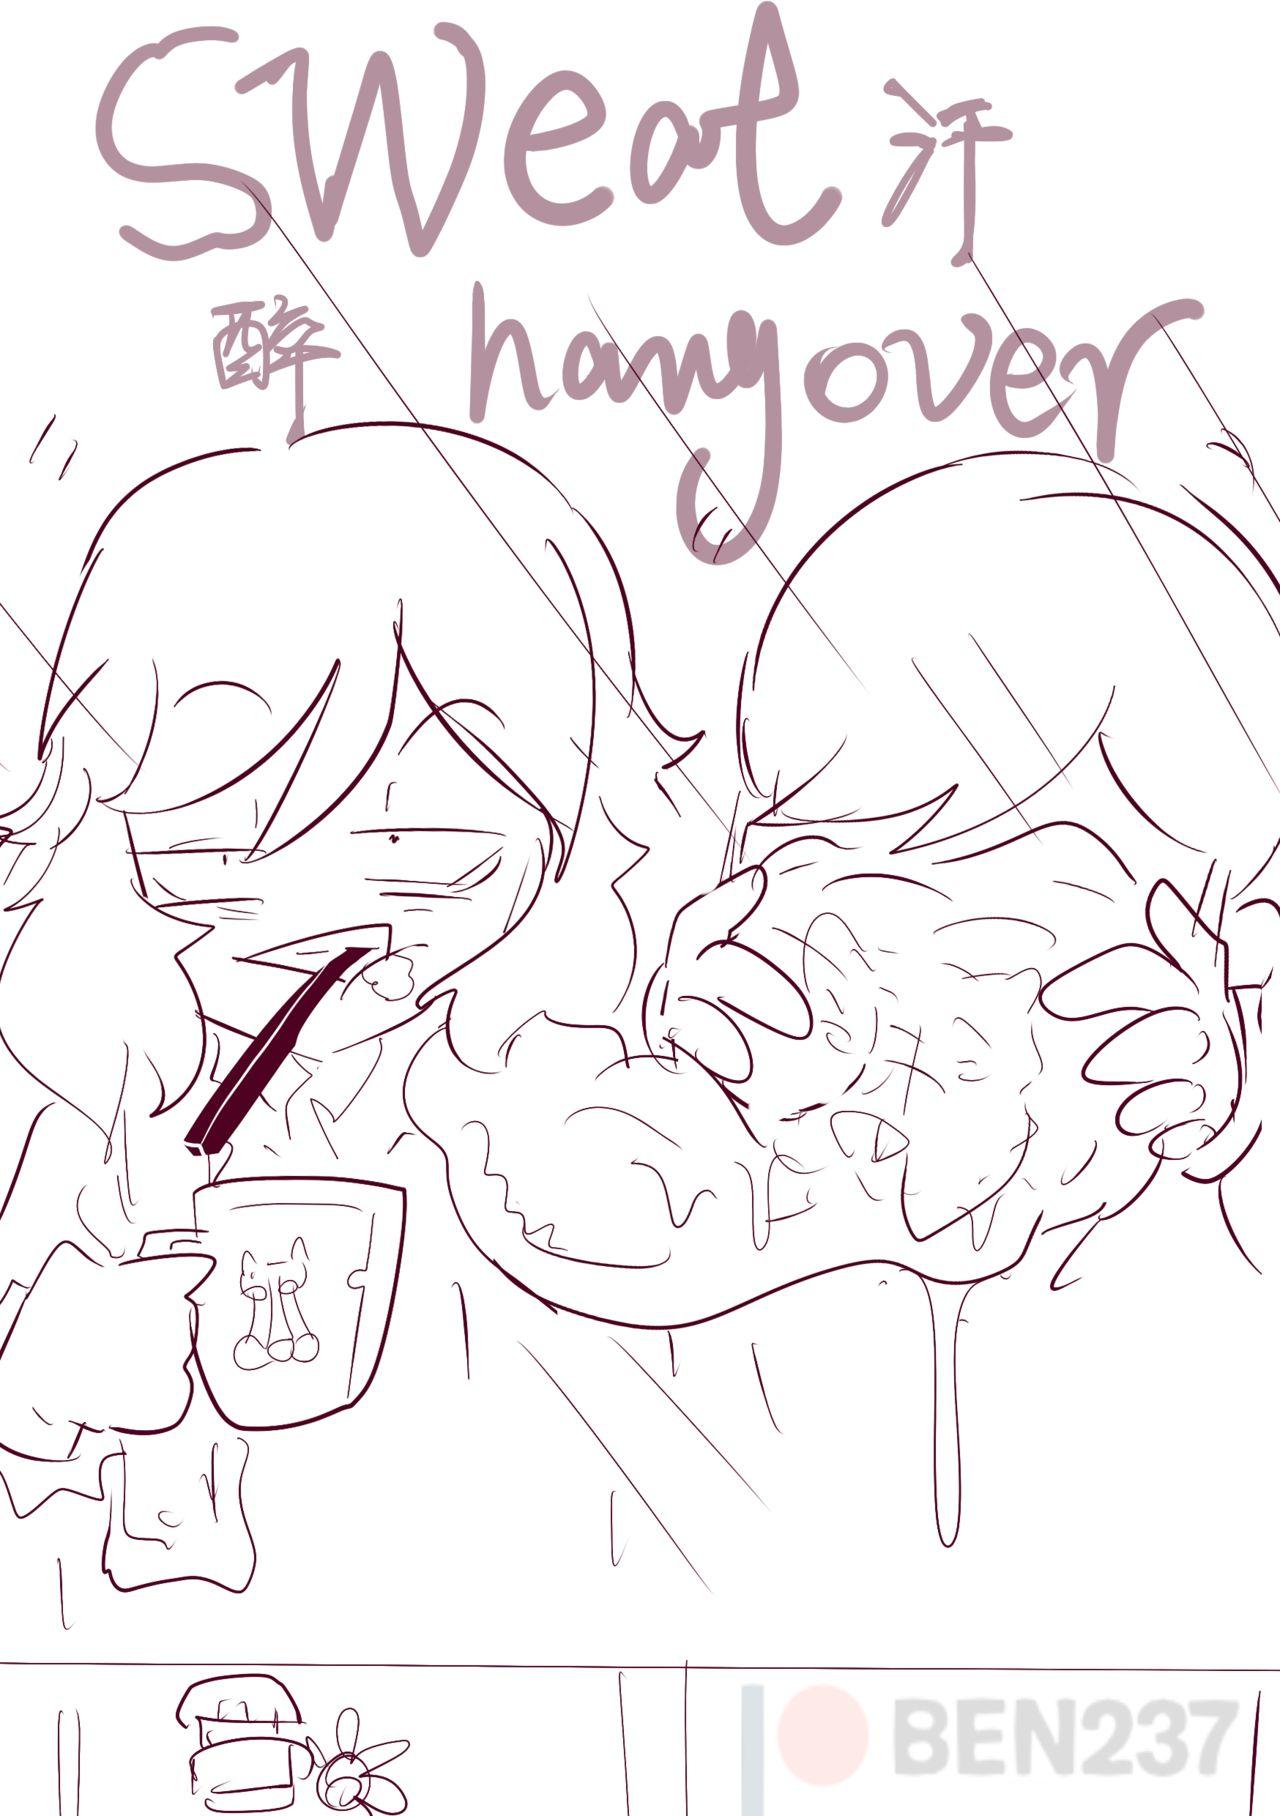 Kansui - sweat hangover. 0